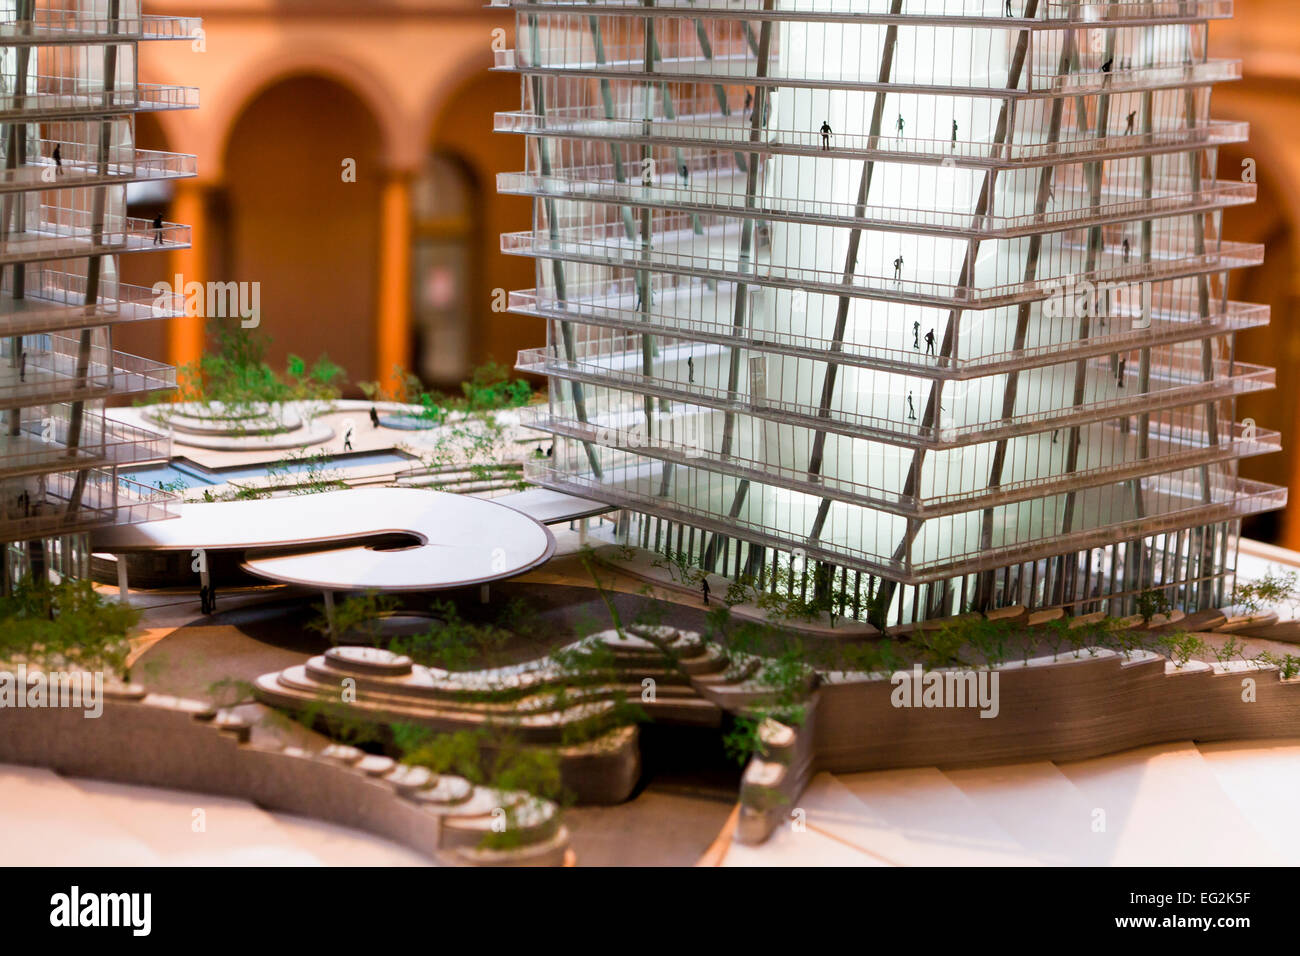 Architekturmodell für Hochhäuser, öffnen Raum Bürogebäude - USA Stockfoto